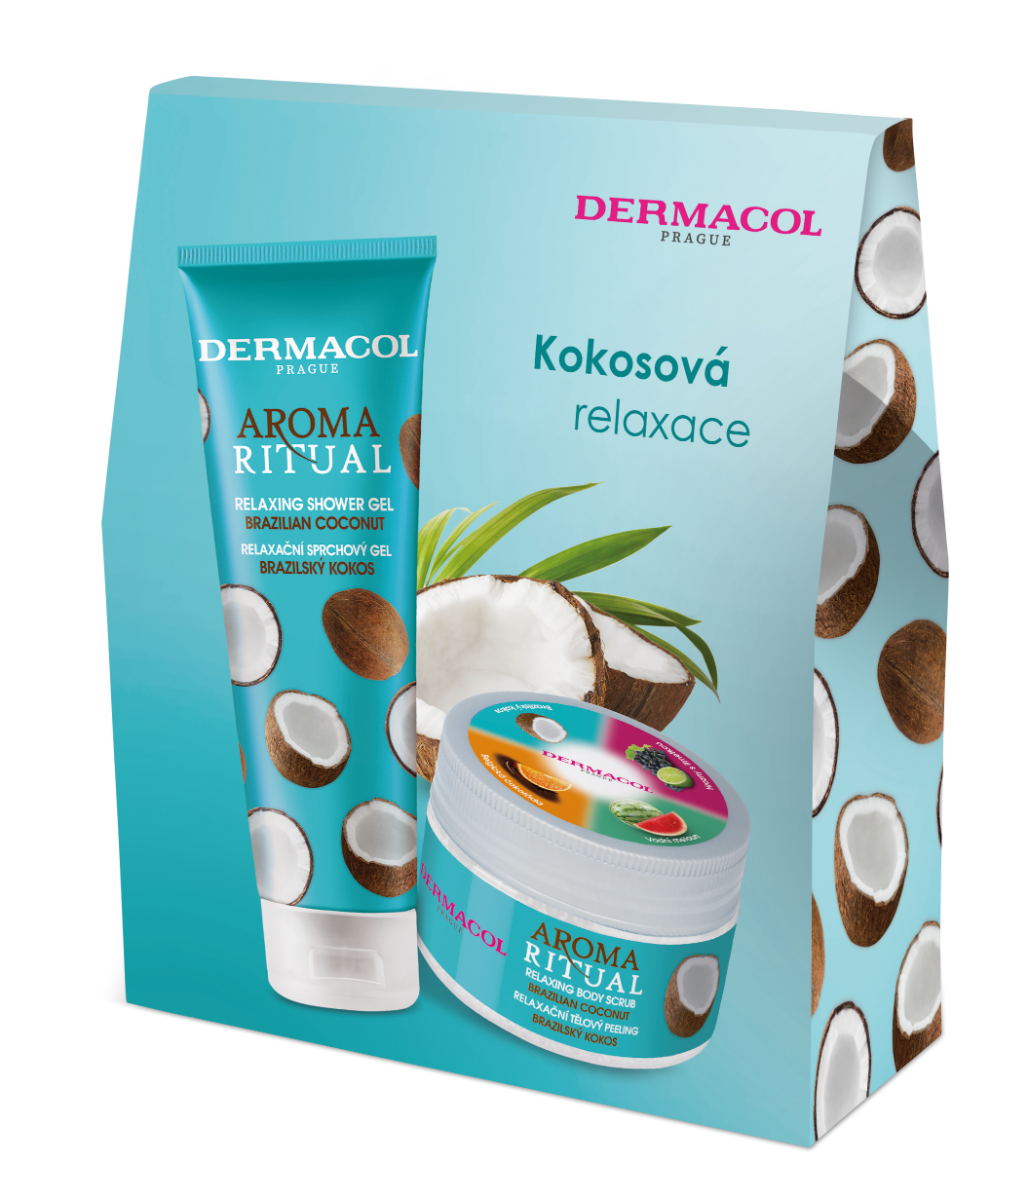 Dermacol Aroma Ritual Kokosová relaxace dárková sada Dermacol